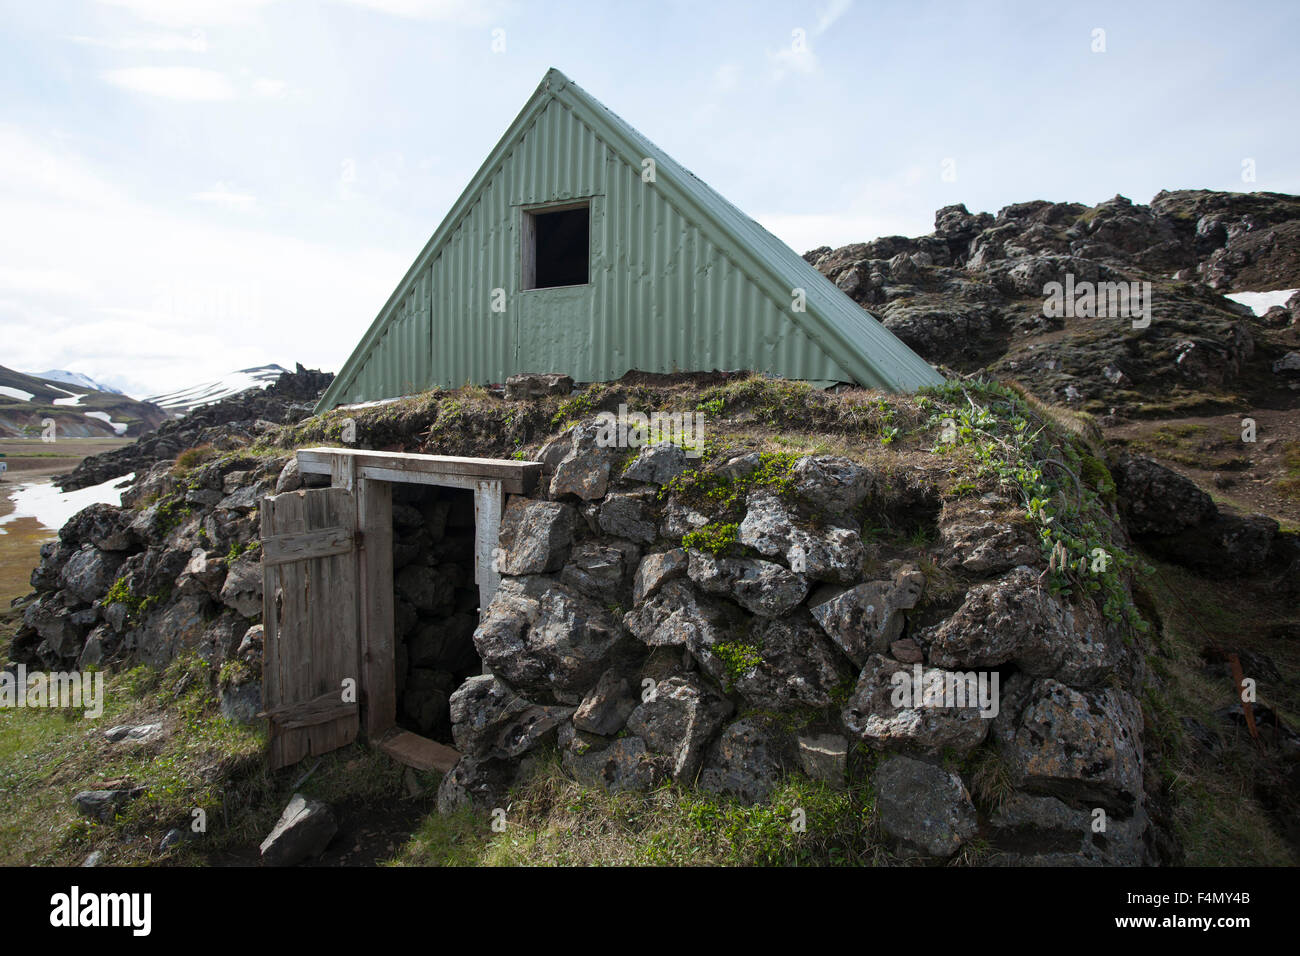 The old mountain shelter at Landmannalugar, Sudhurland, Iceland. Stock Photo